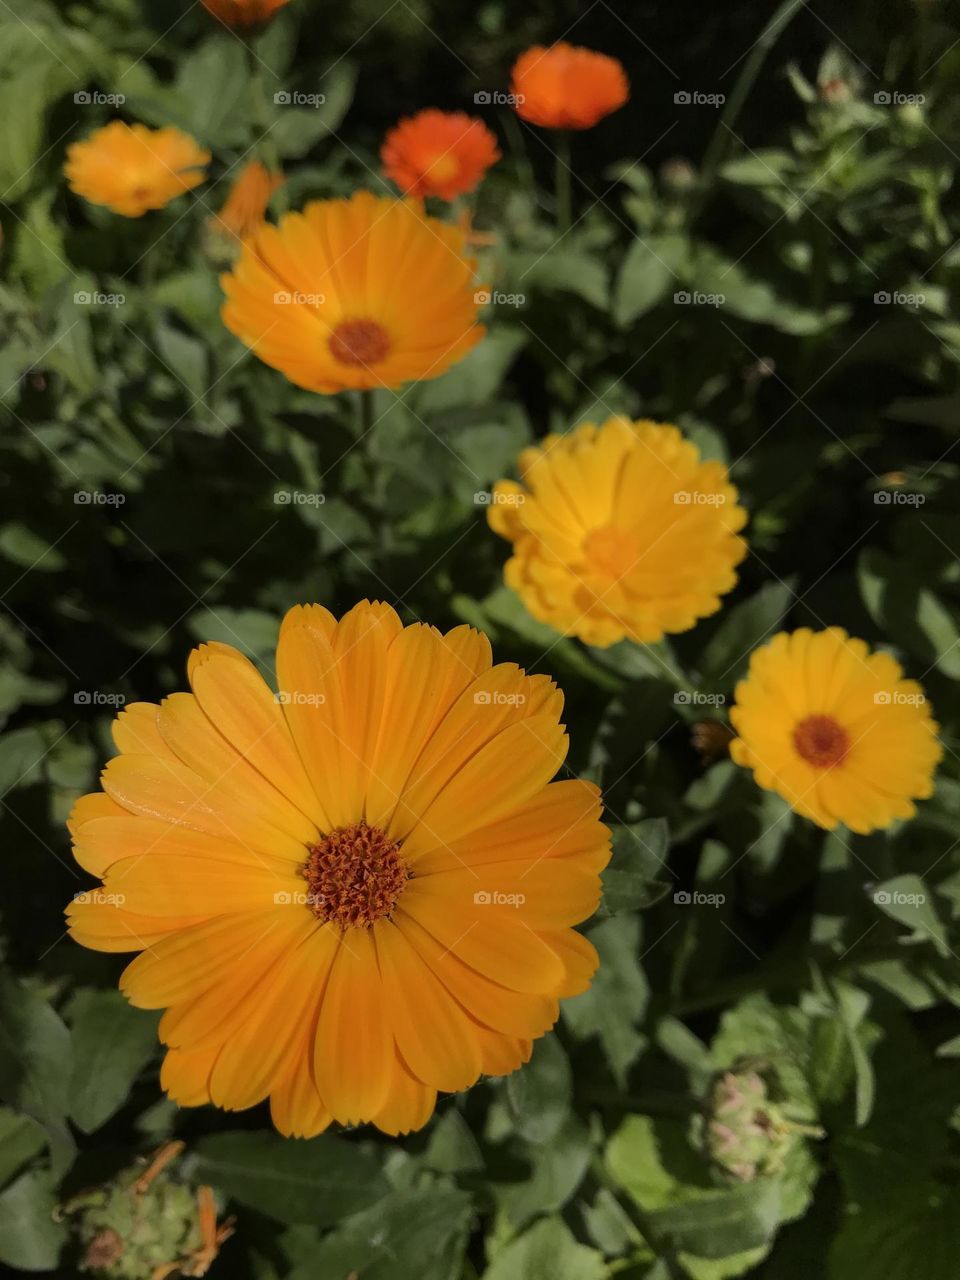 Marigold flowers, spring has sprung!